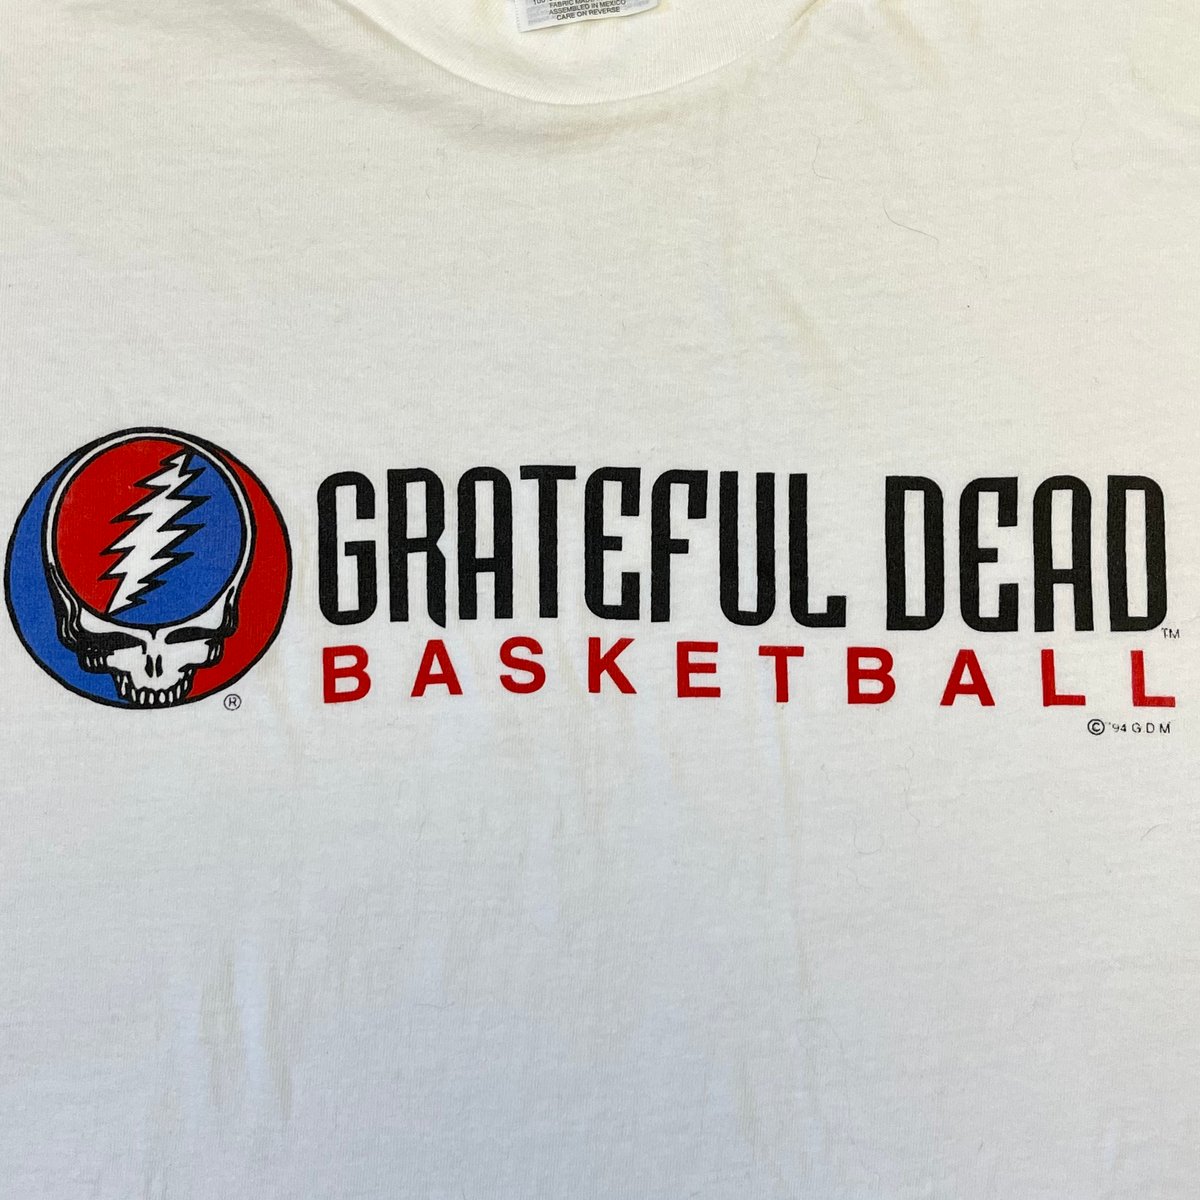 Original Vintage Grateful Dead Basketball 1994 Short Sleeve Tee! - X-LARGE